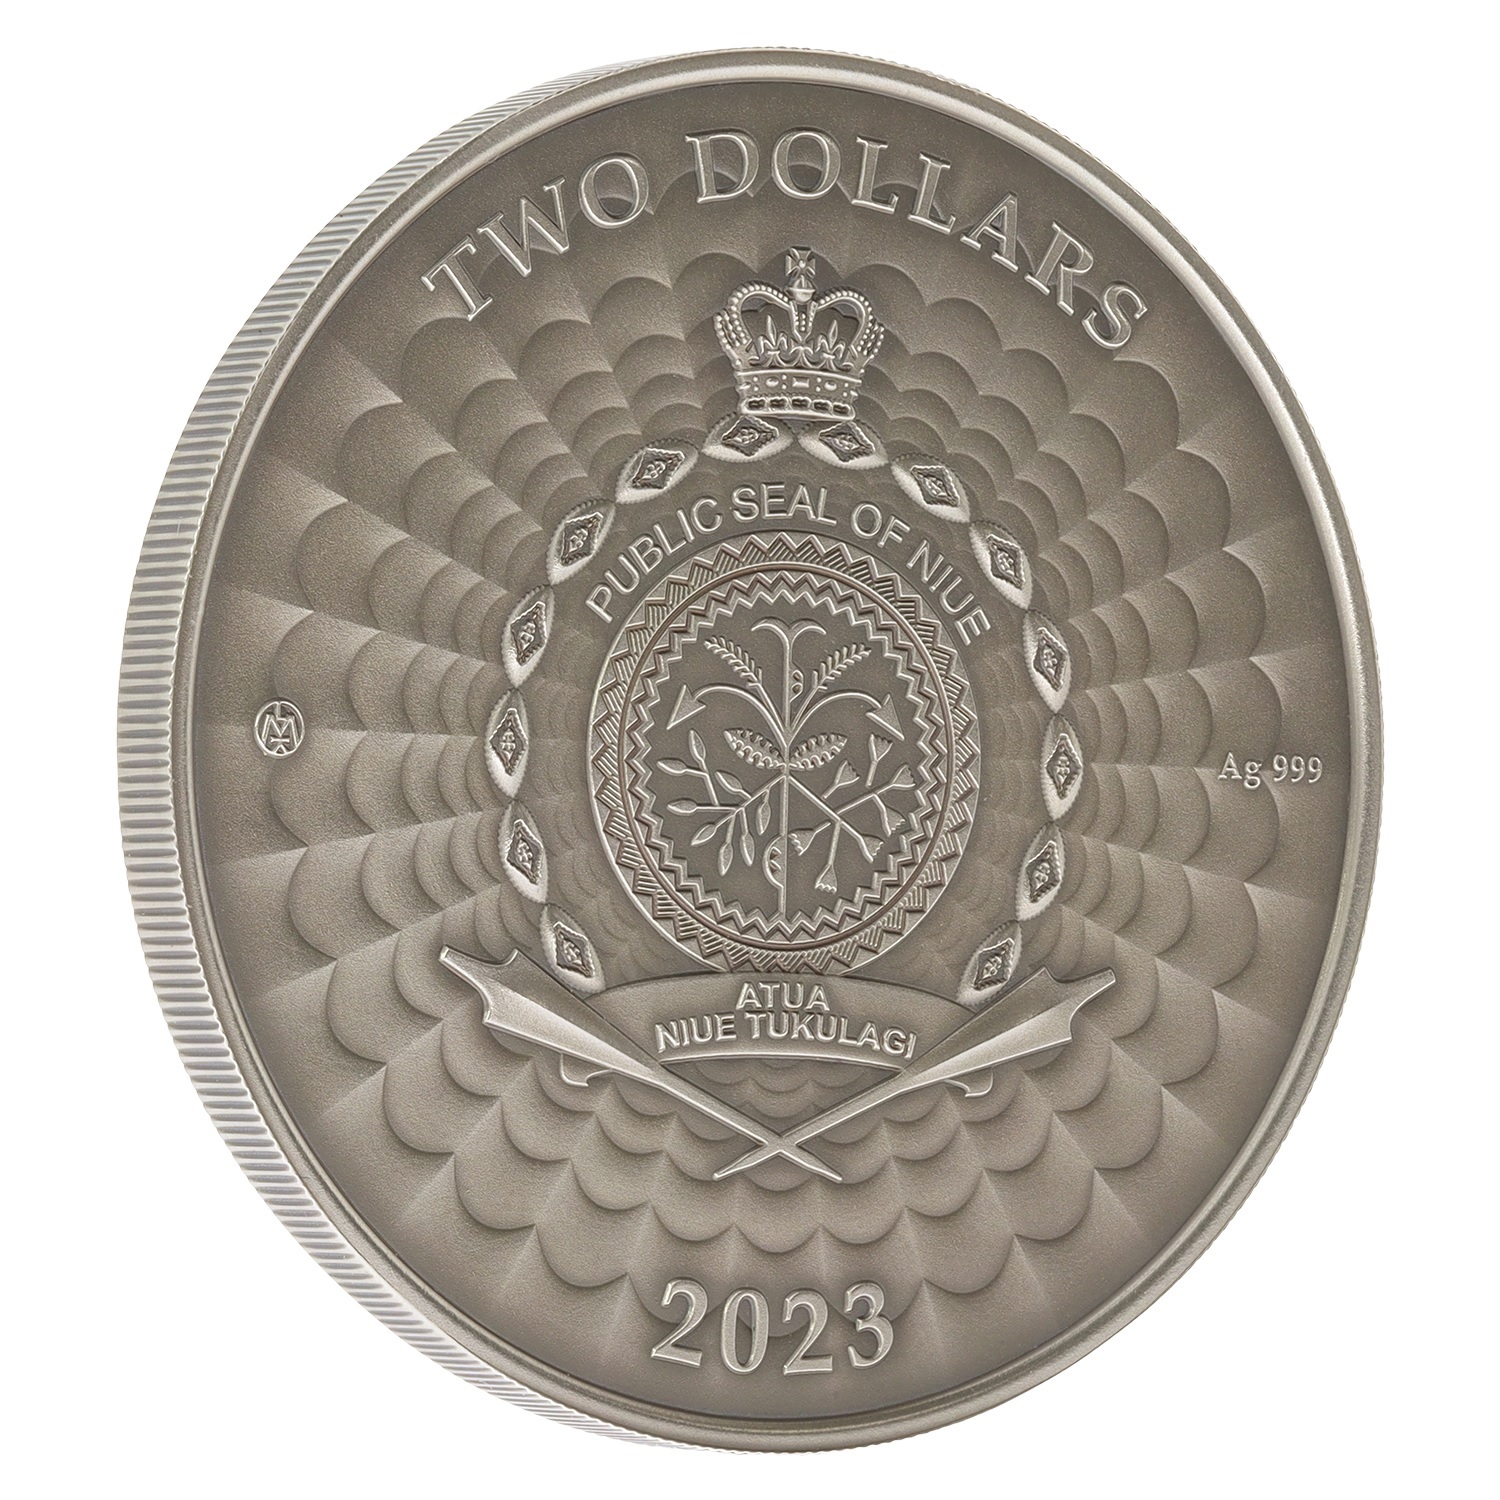 (W160.2.D.2023.15221673) Niue 2 Dollars Jinn 2023 - Antique silver Obverse (zoom)